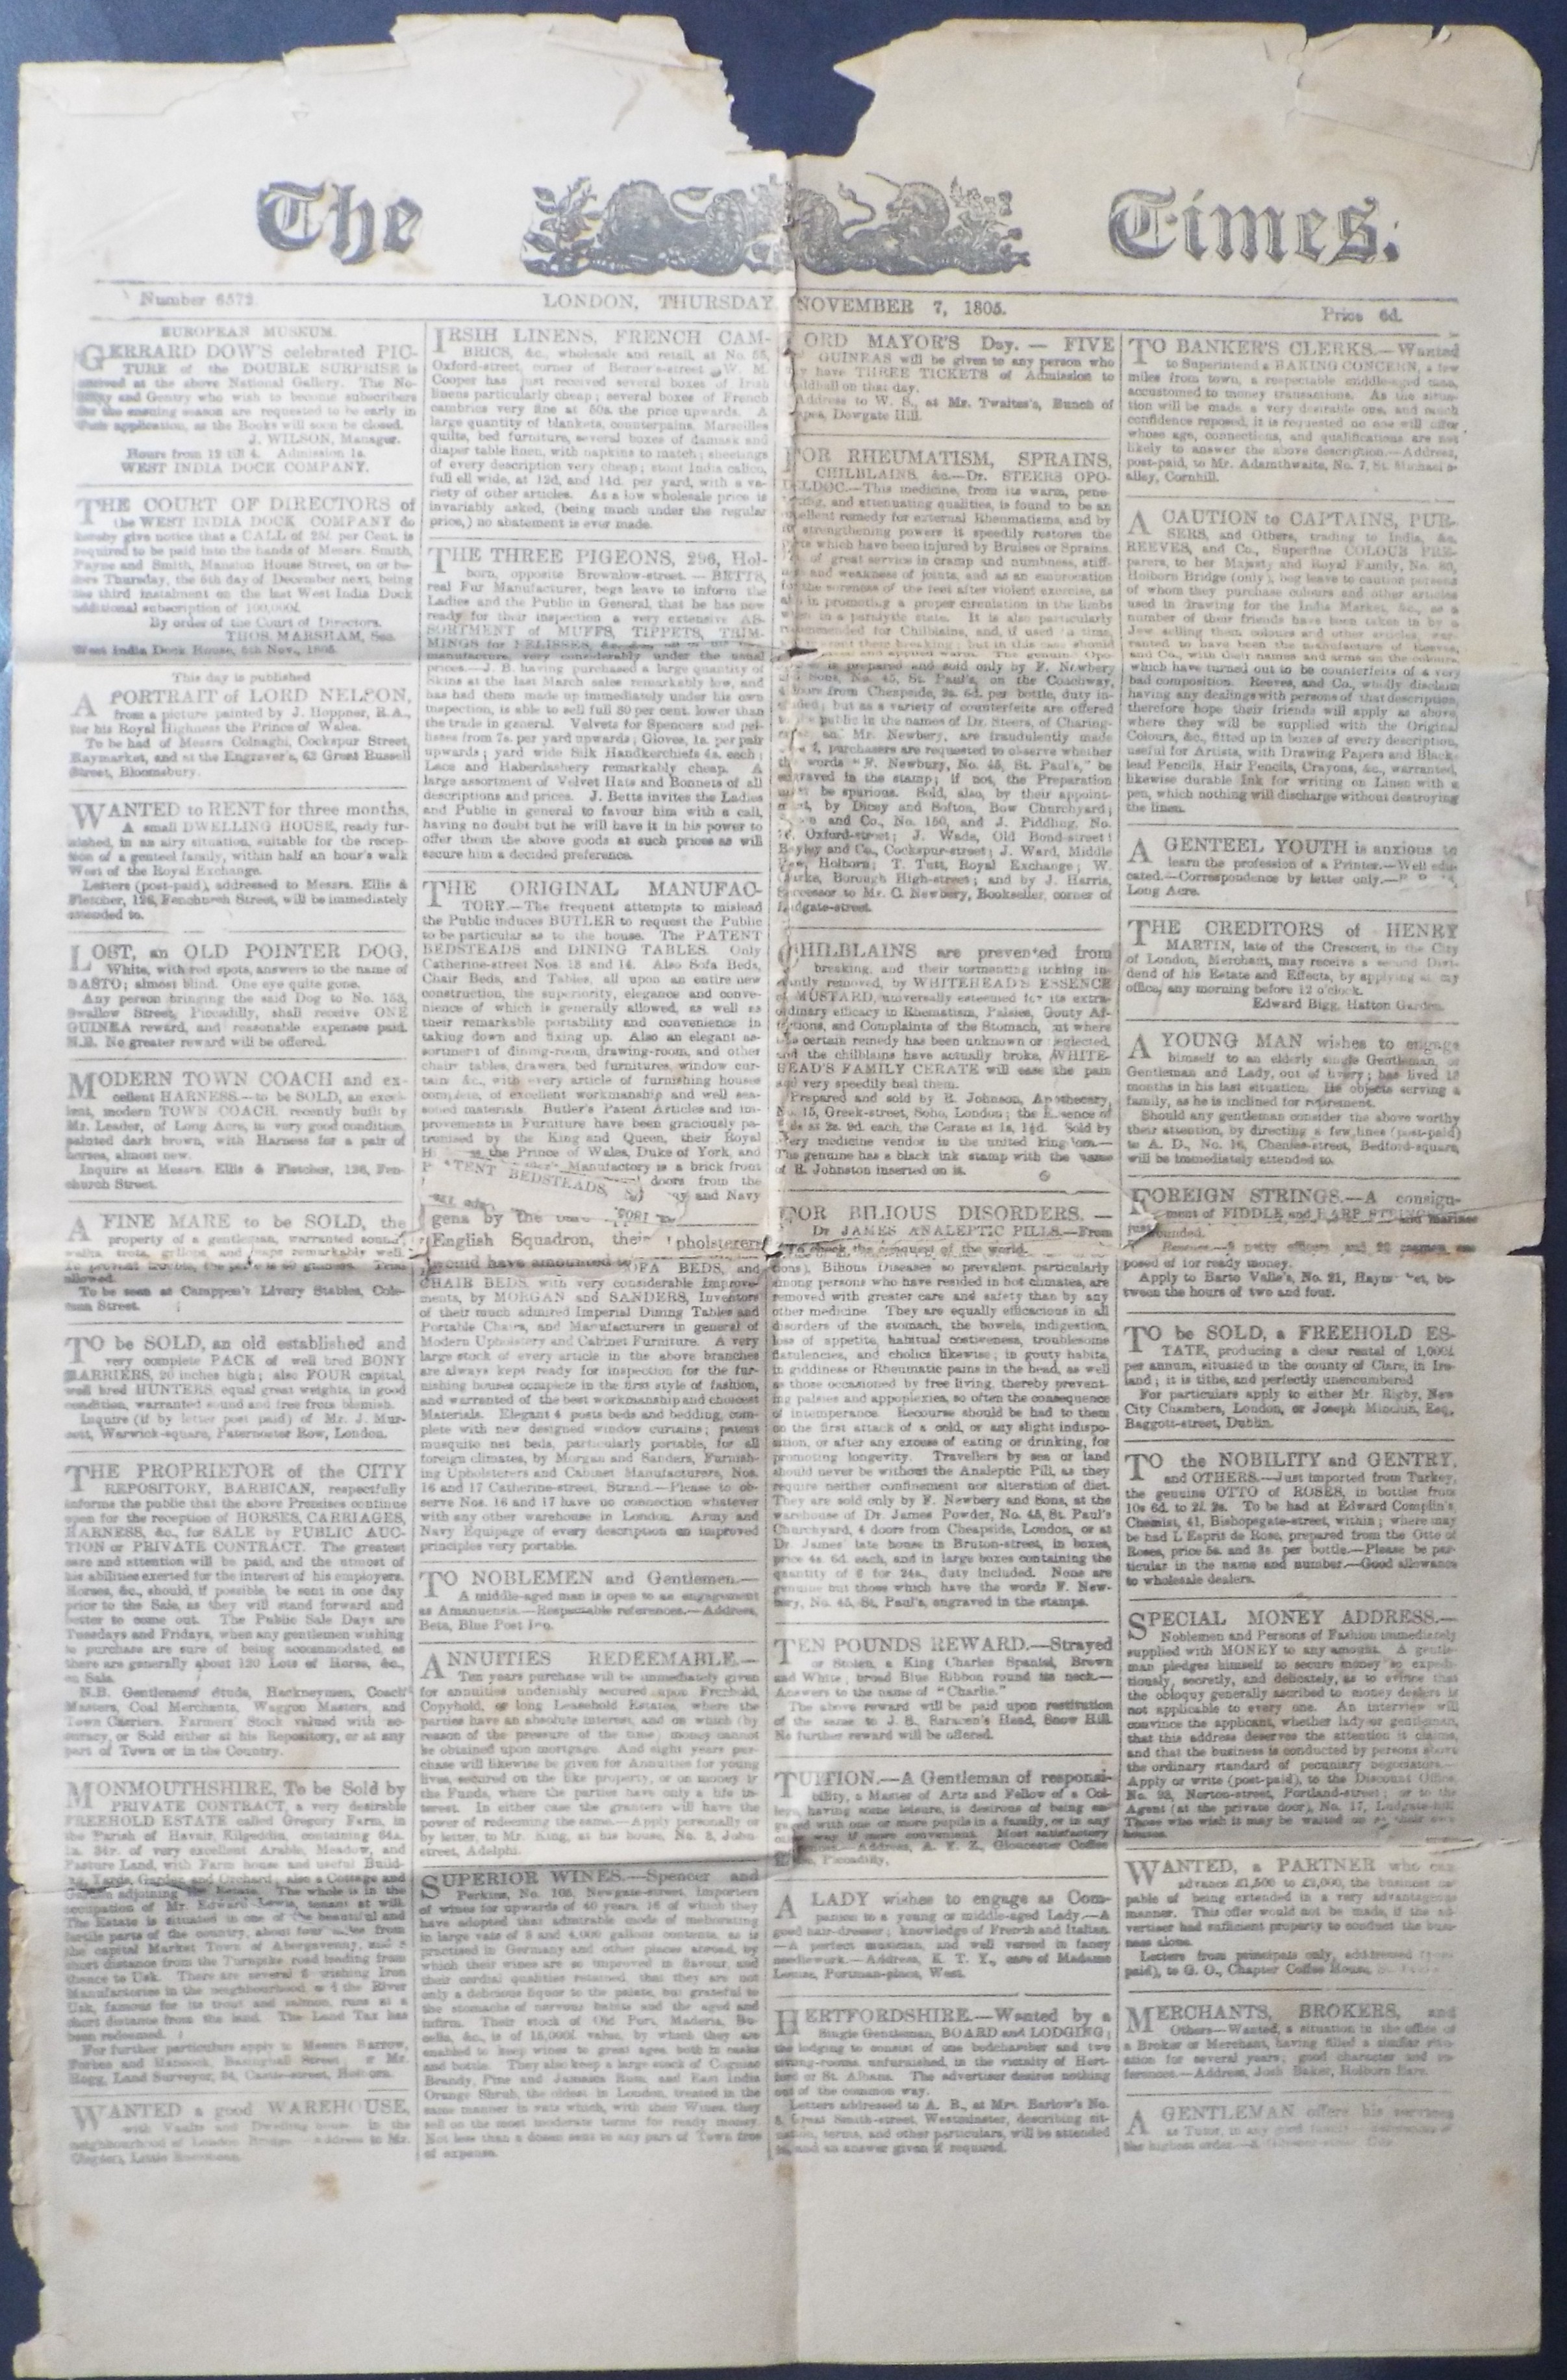 Letterpress - The Times. Thursday, November 7 1805. Containing report of the Battle of Trafalgar.